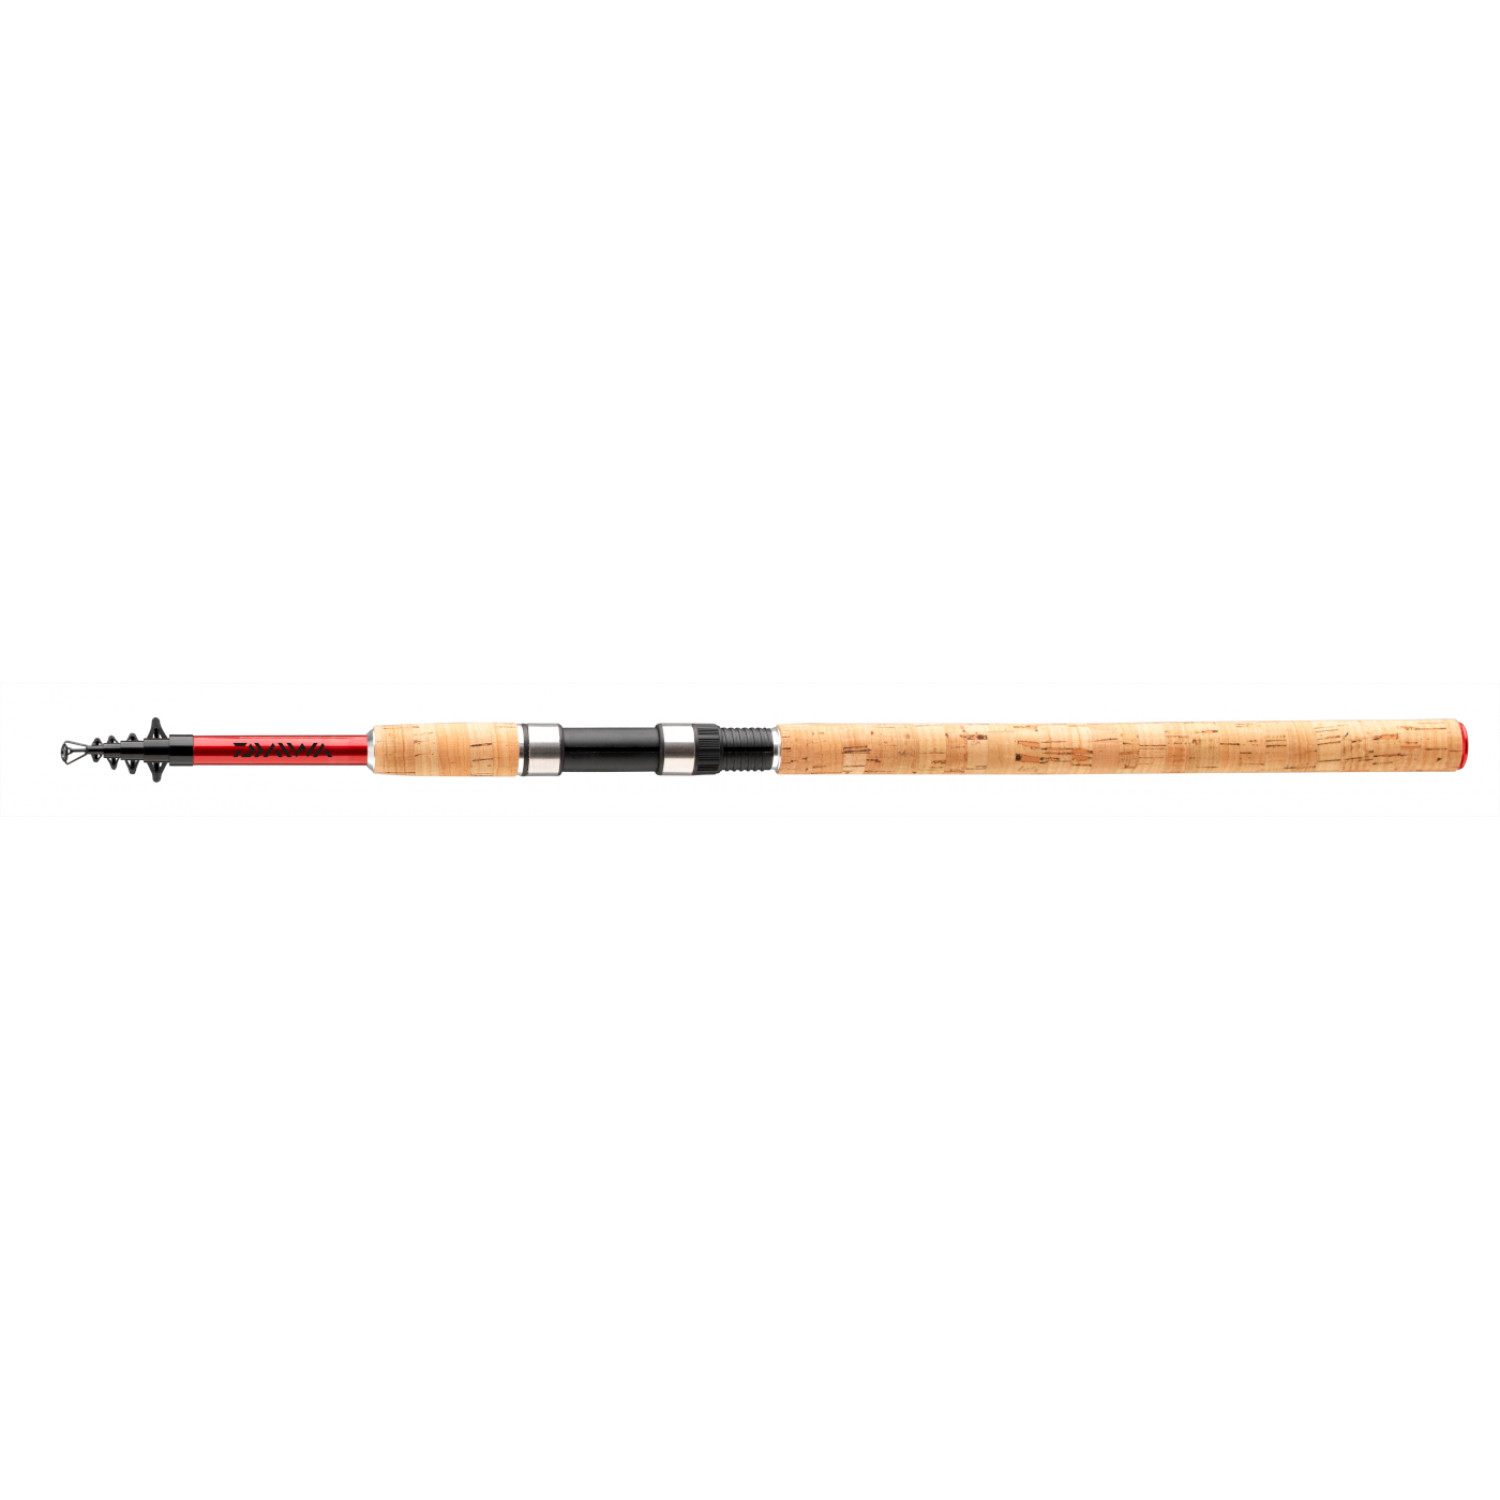 DAIWA Sweepfire Tele Telescopic Fishing Rod 11421 190 00